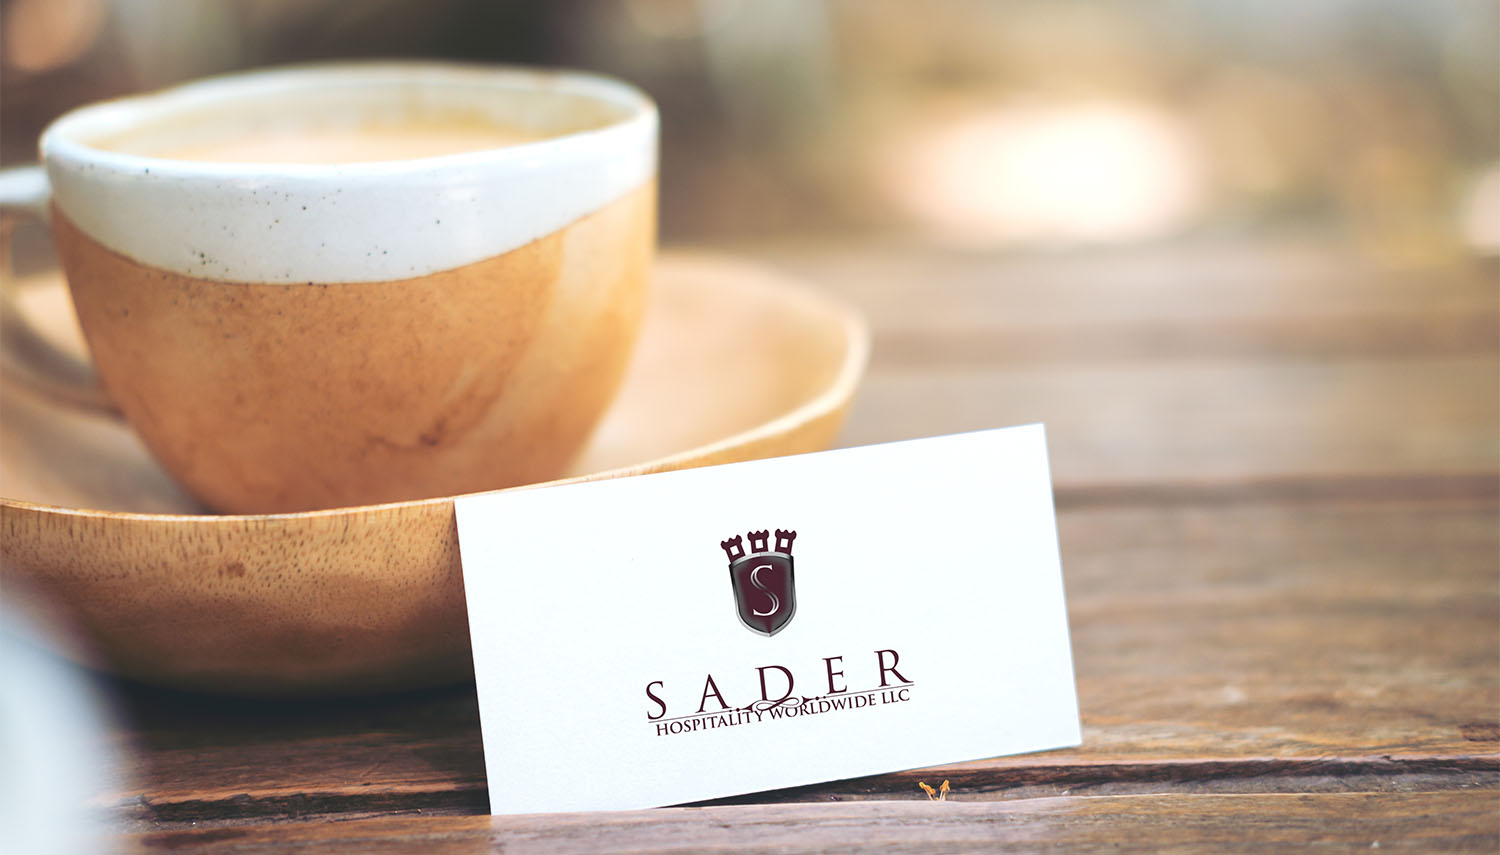 Apercher Marketing Solutions for hospitality stationary design for Sader Hospitality Worldwide